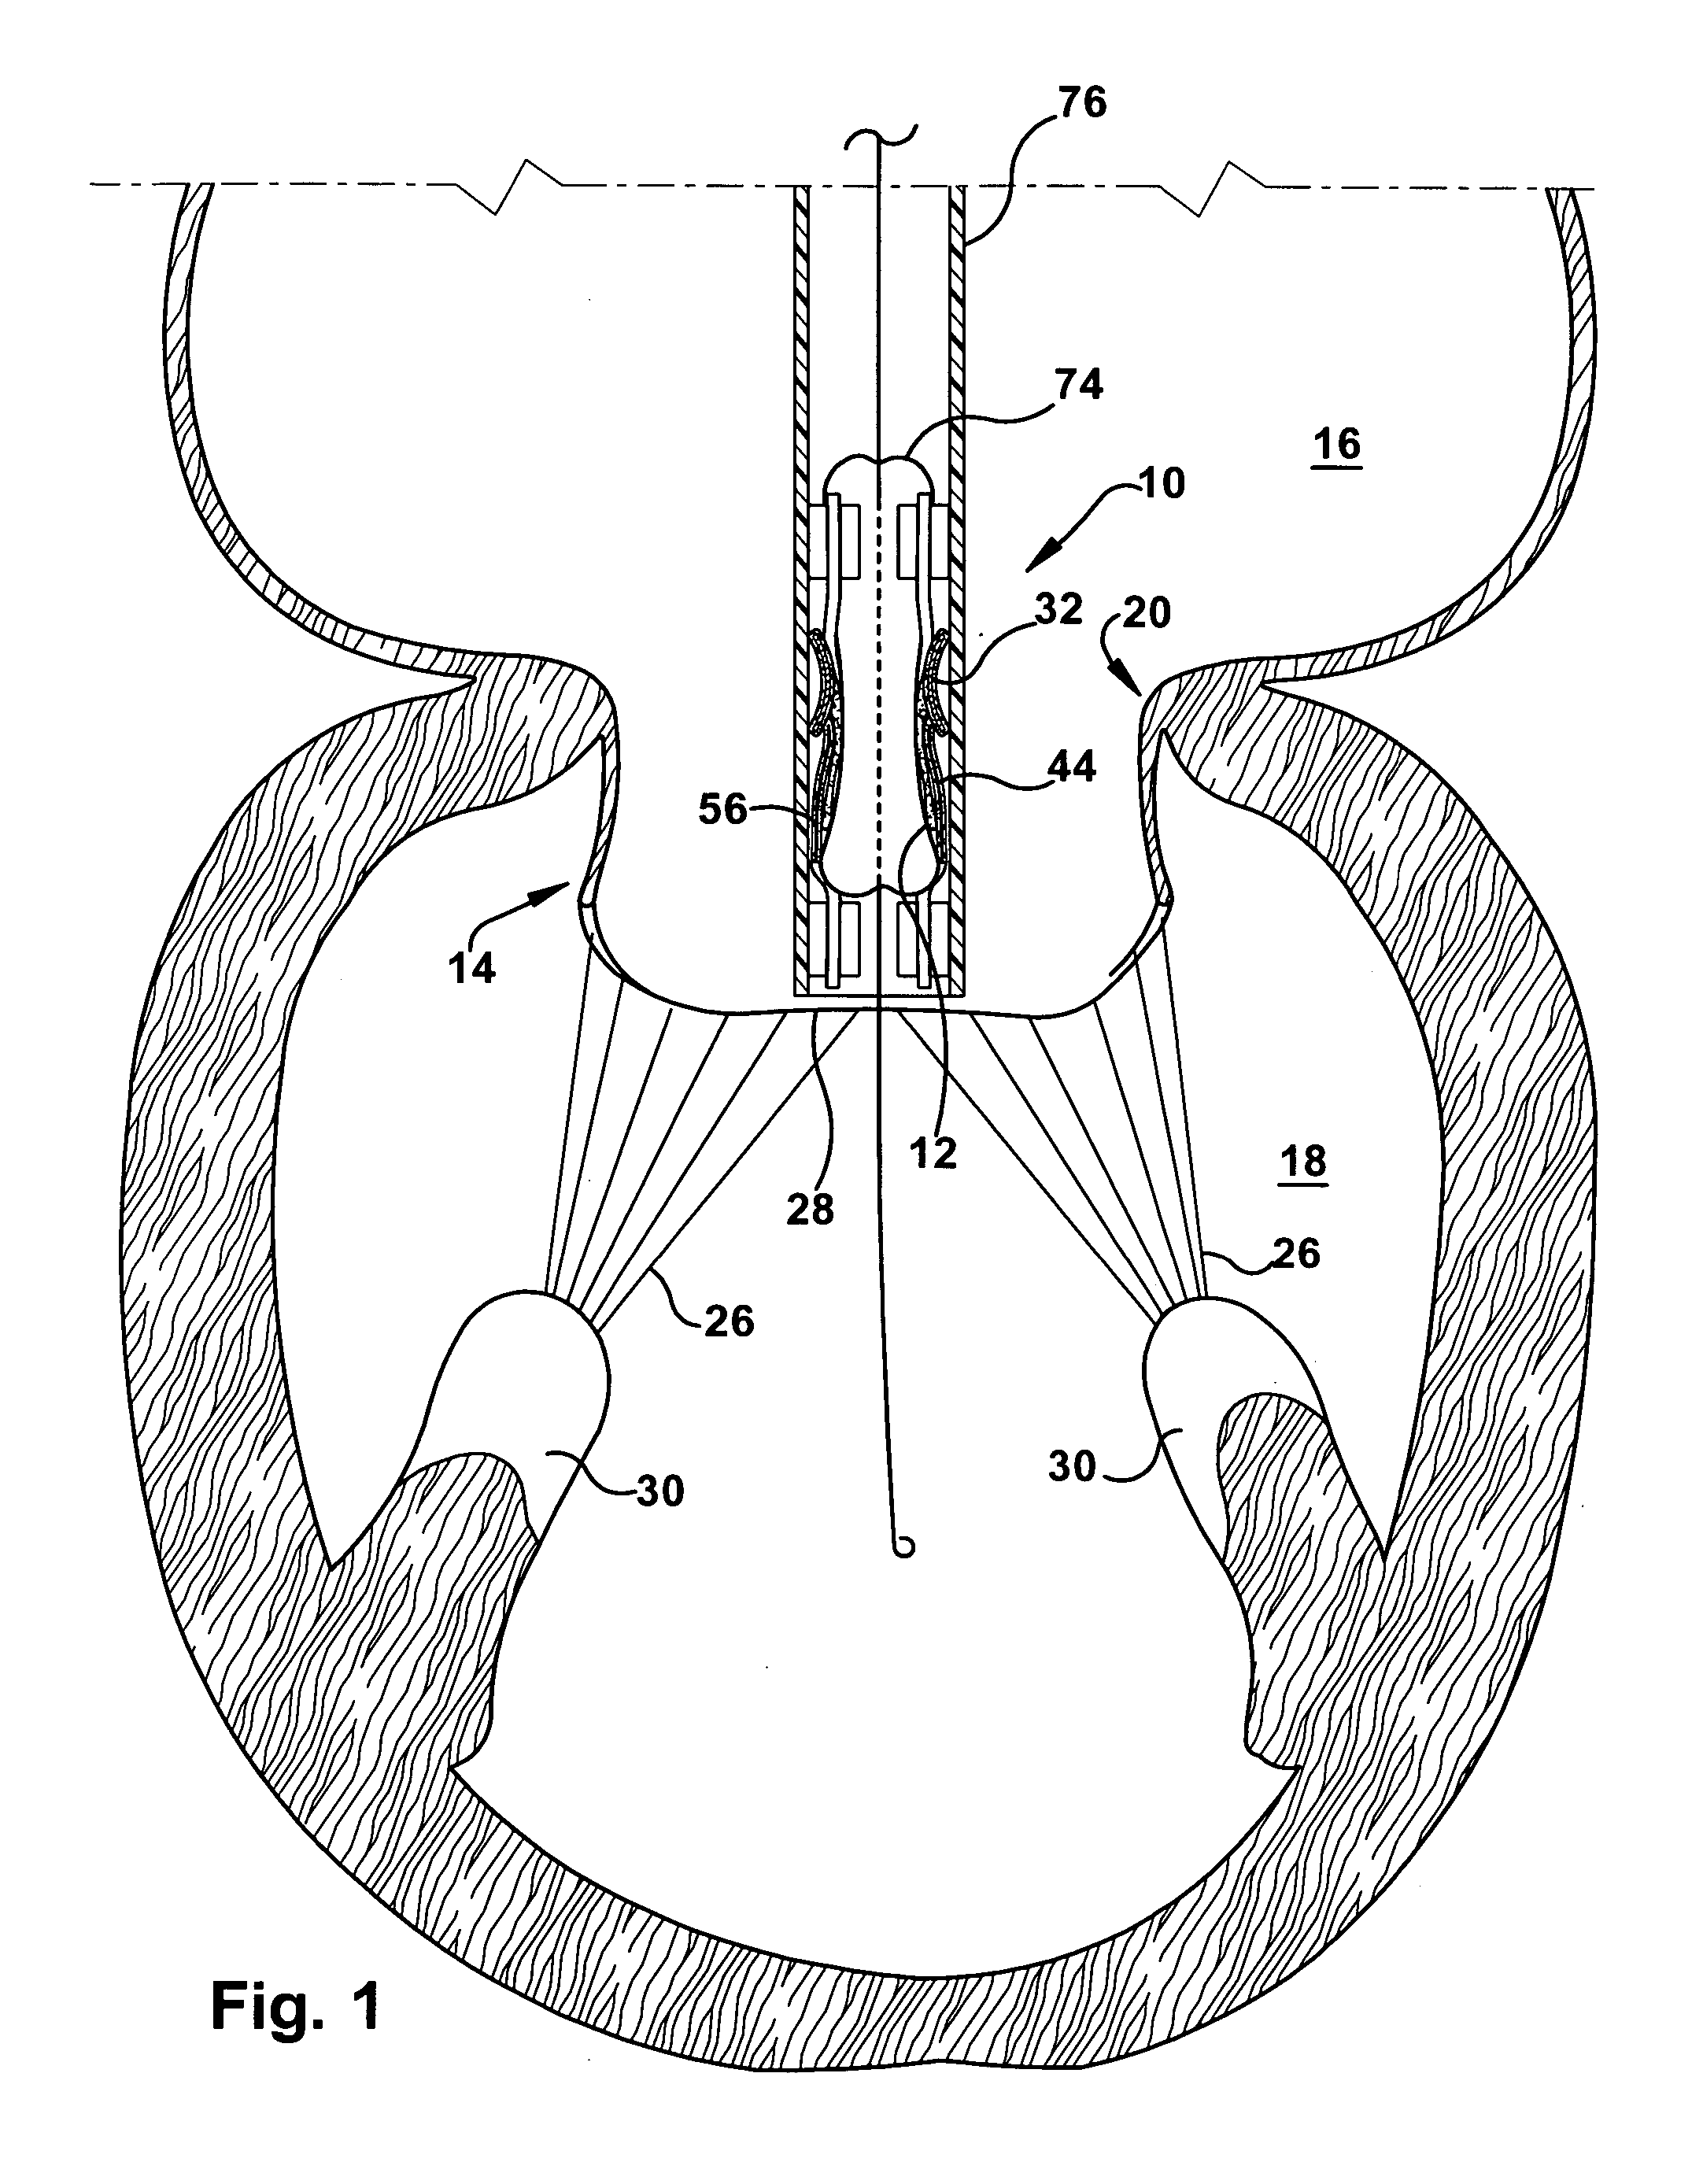 Apparatus and method for replacing a cardiac valve